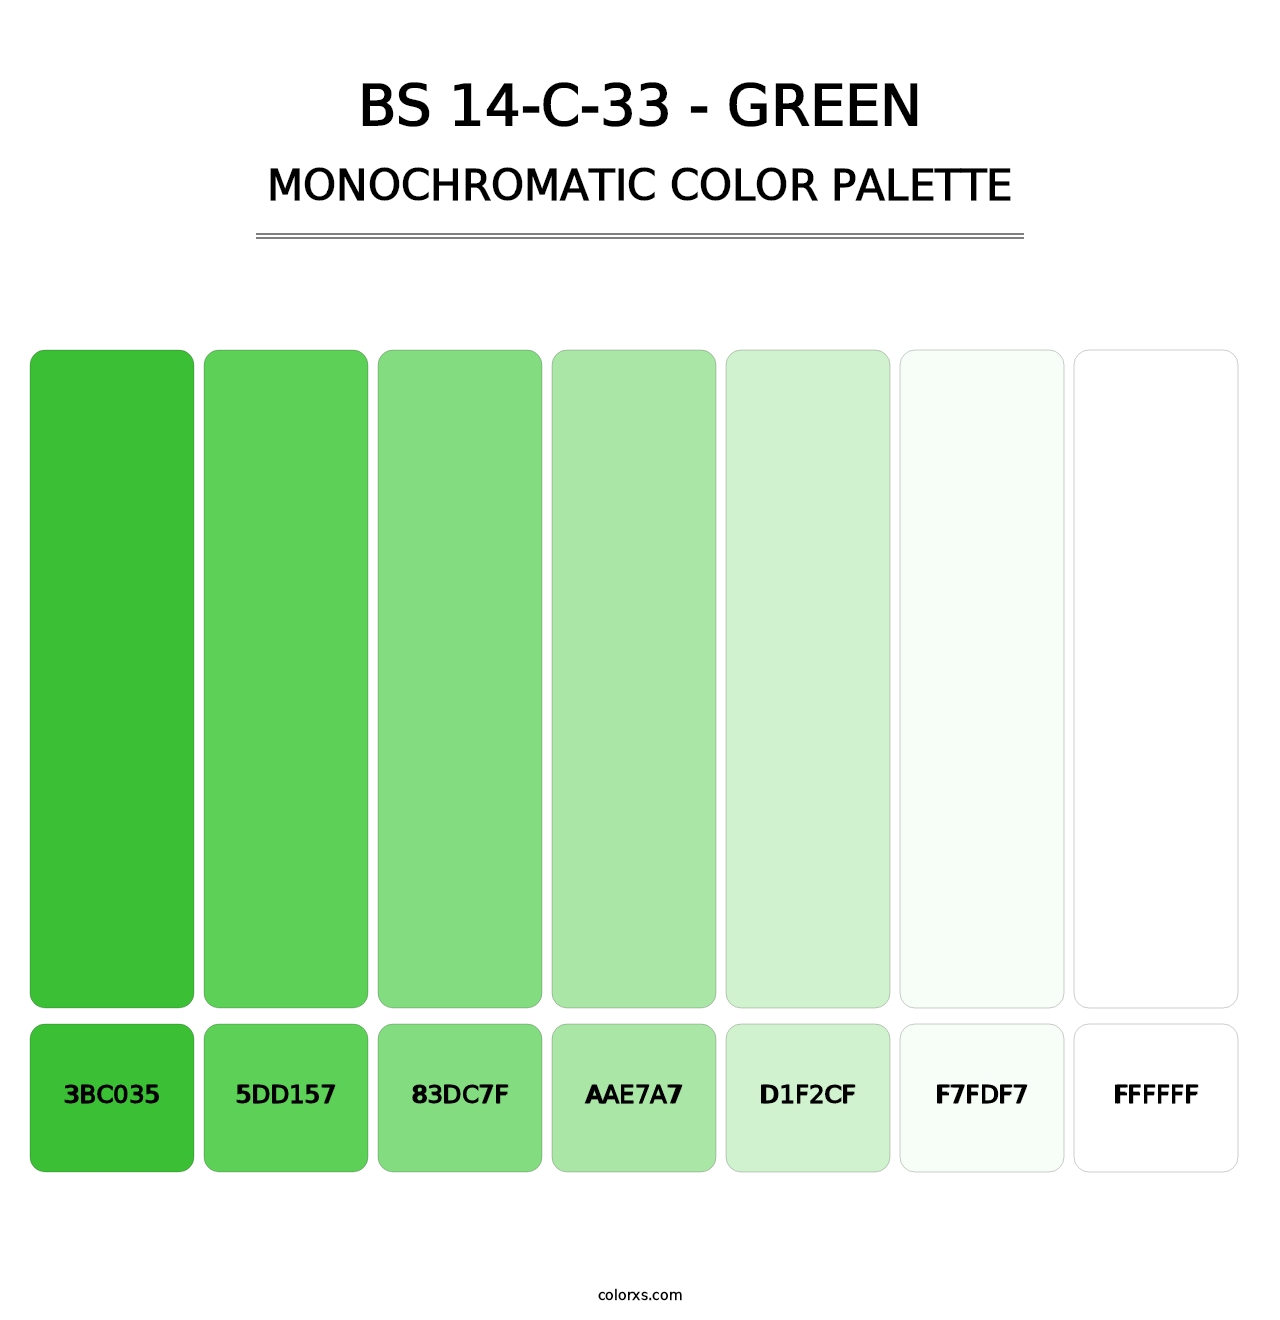 BS 14-C-33 - Green - Monochromatic Color Palette